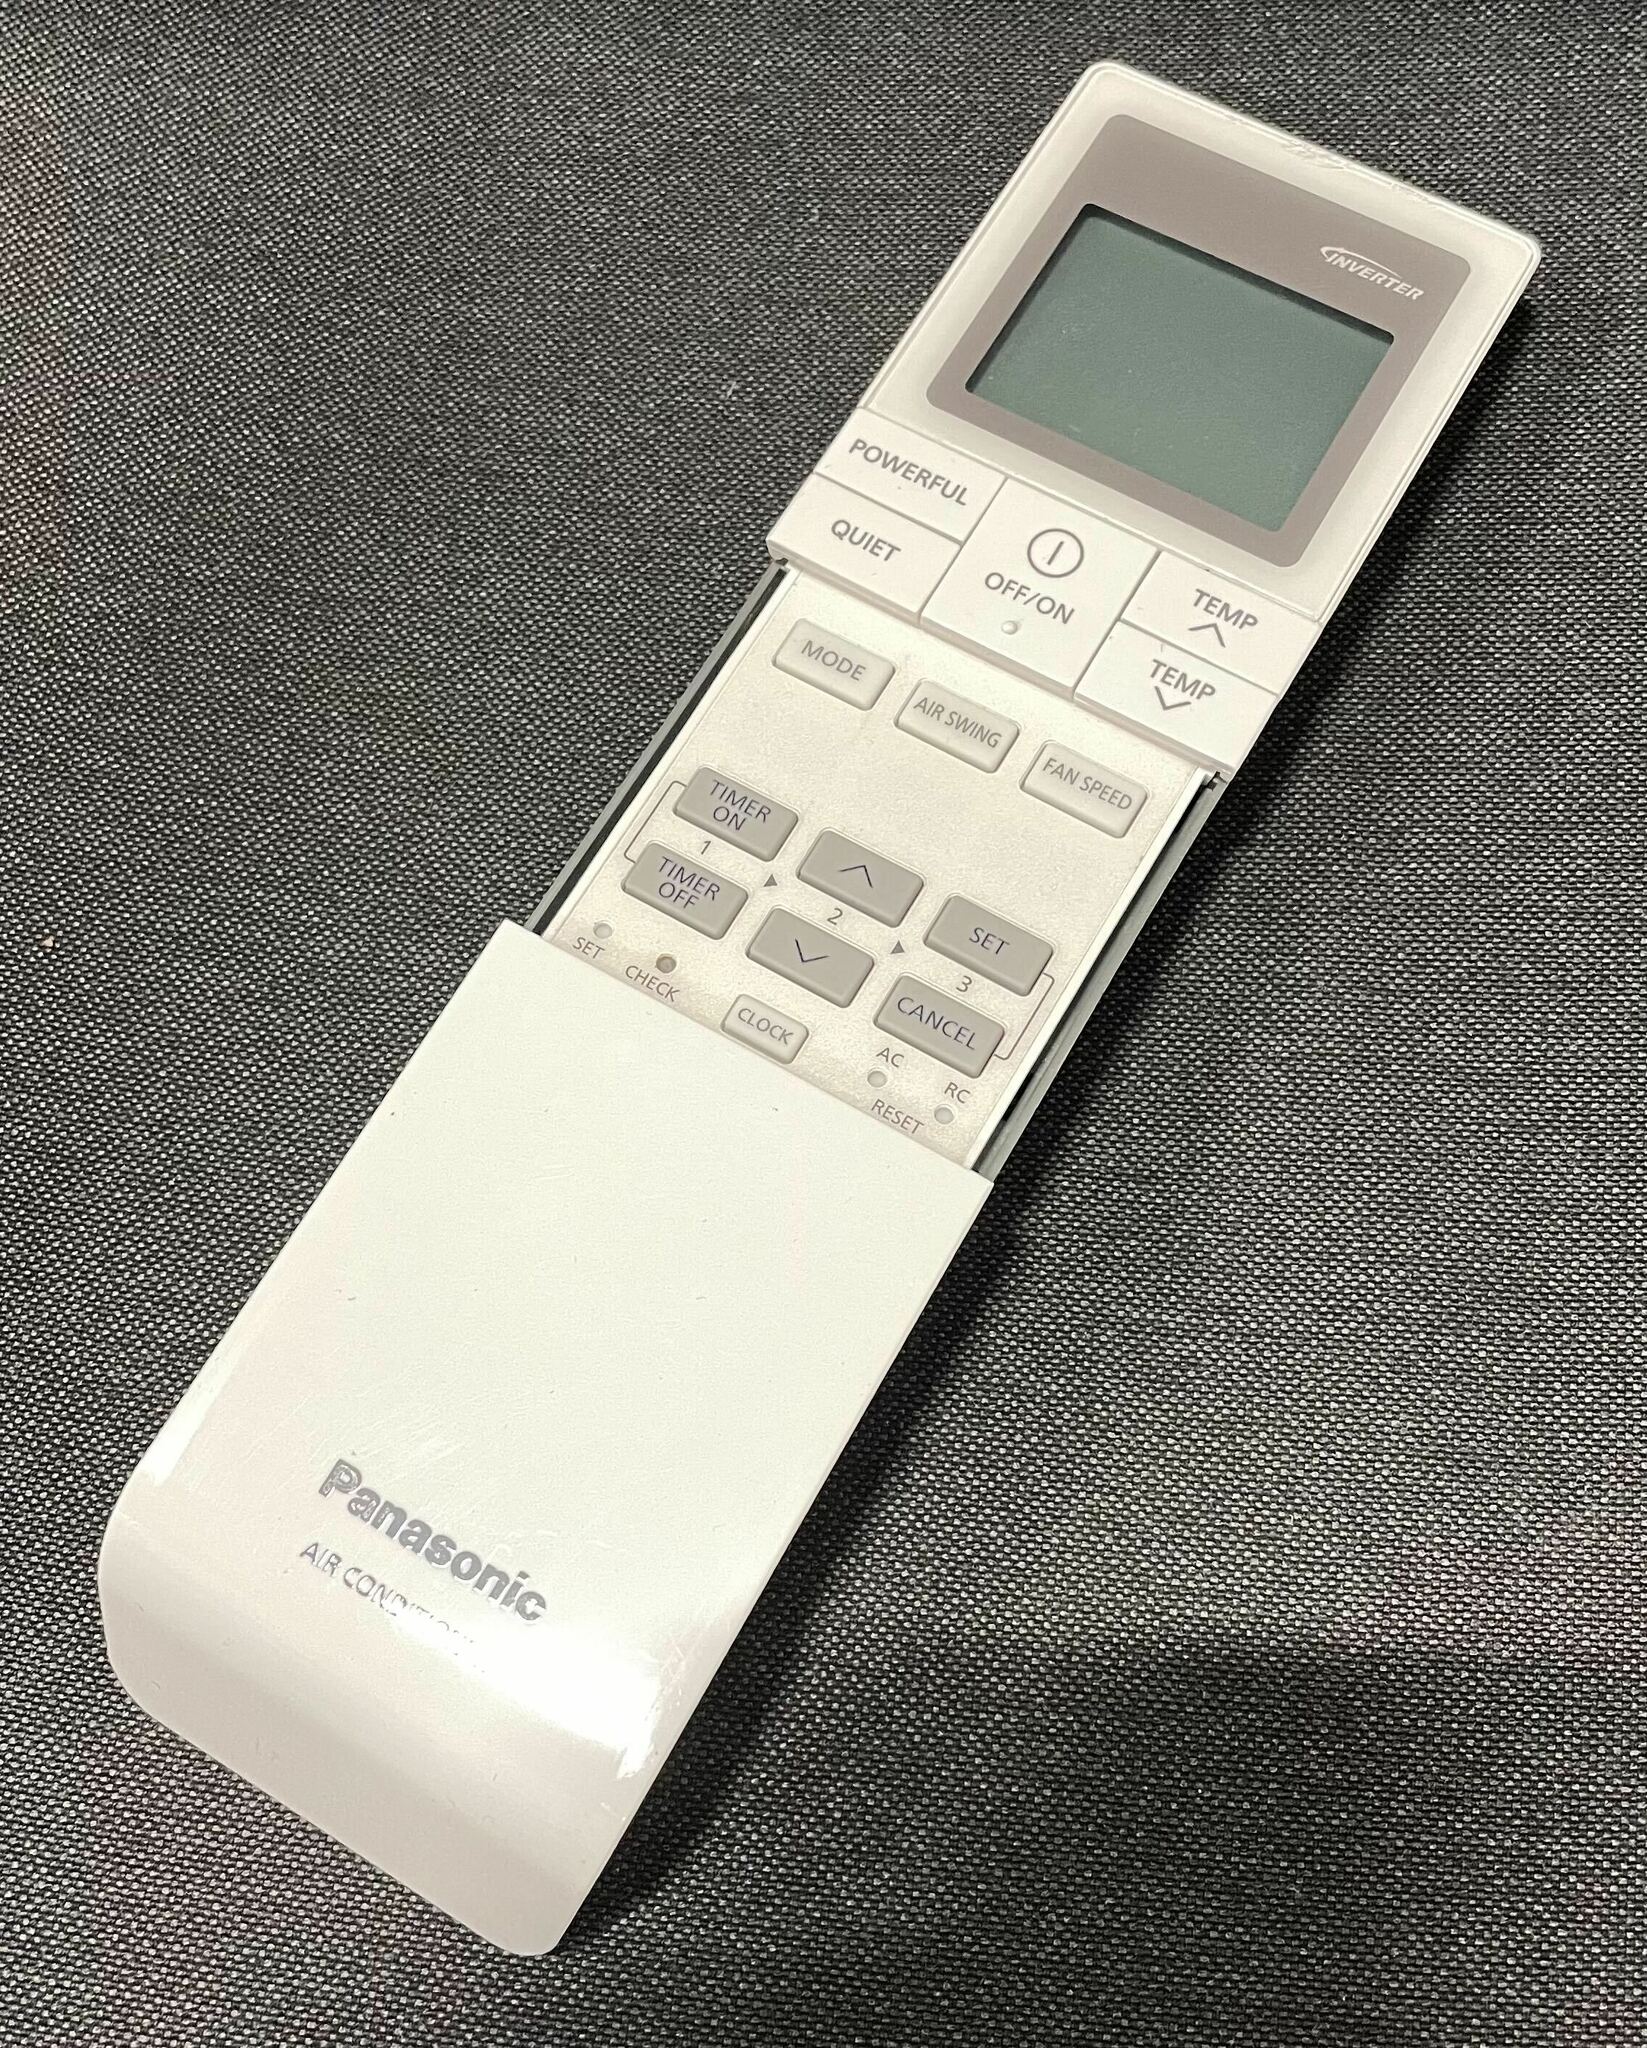 Panasonic Remote Control Part no. 13400 - Refurbished & Tested